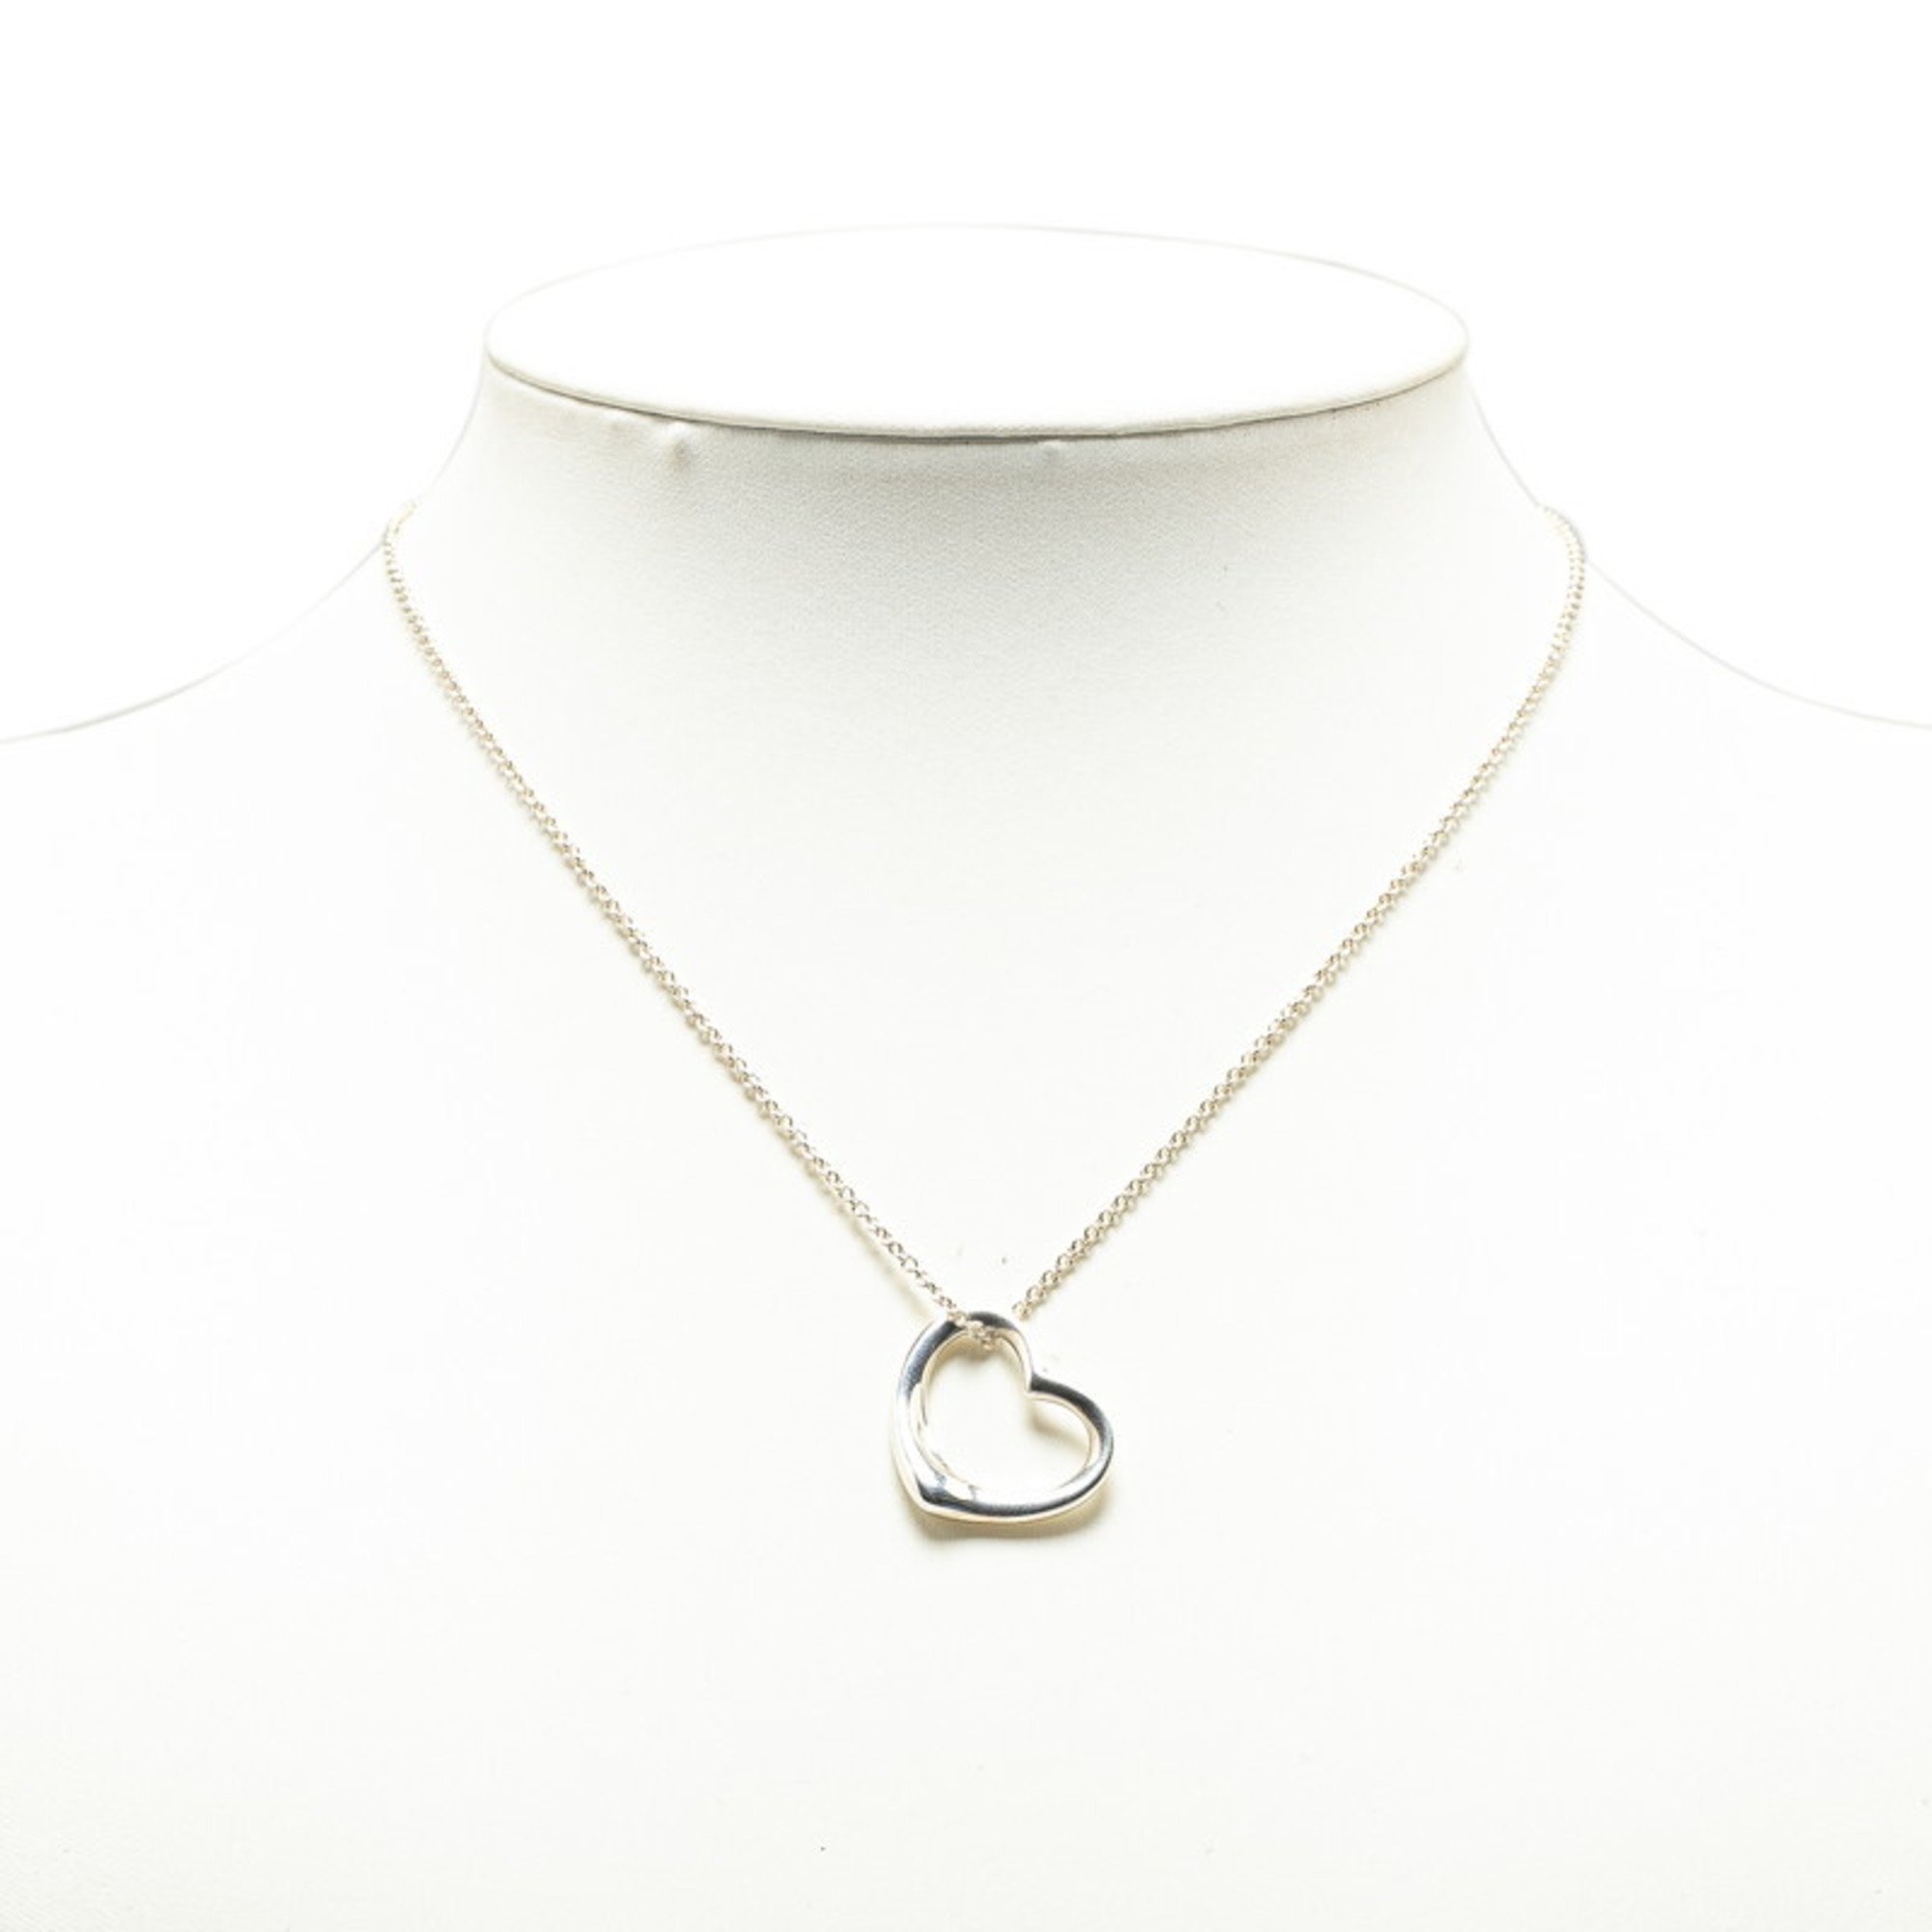 Tiffany Heart Necklace SV925 Silver Women's TIFFANY&Co.